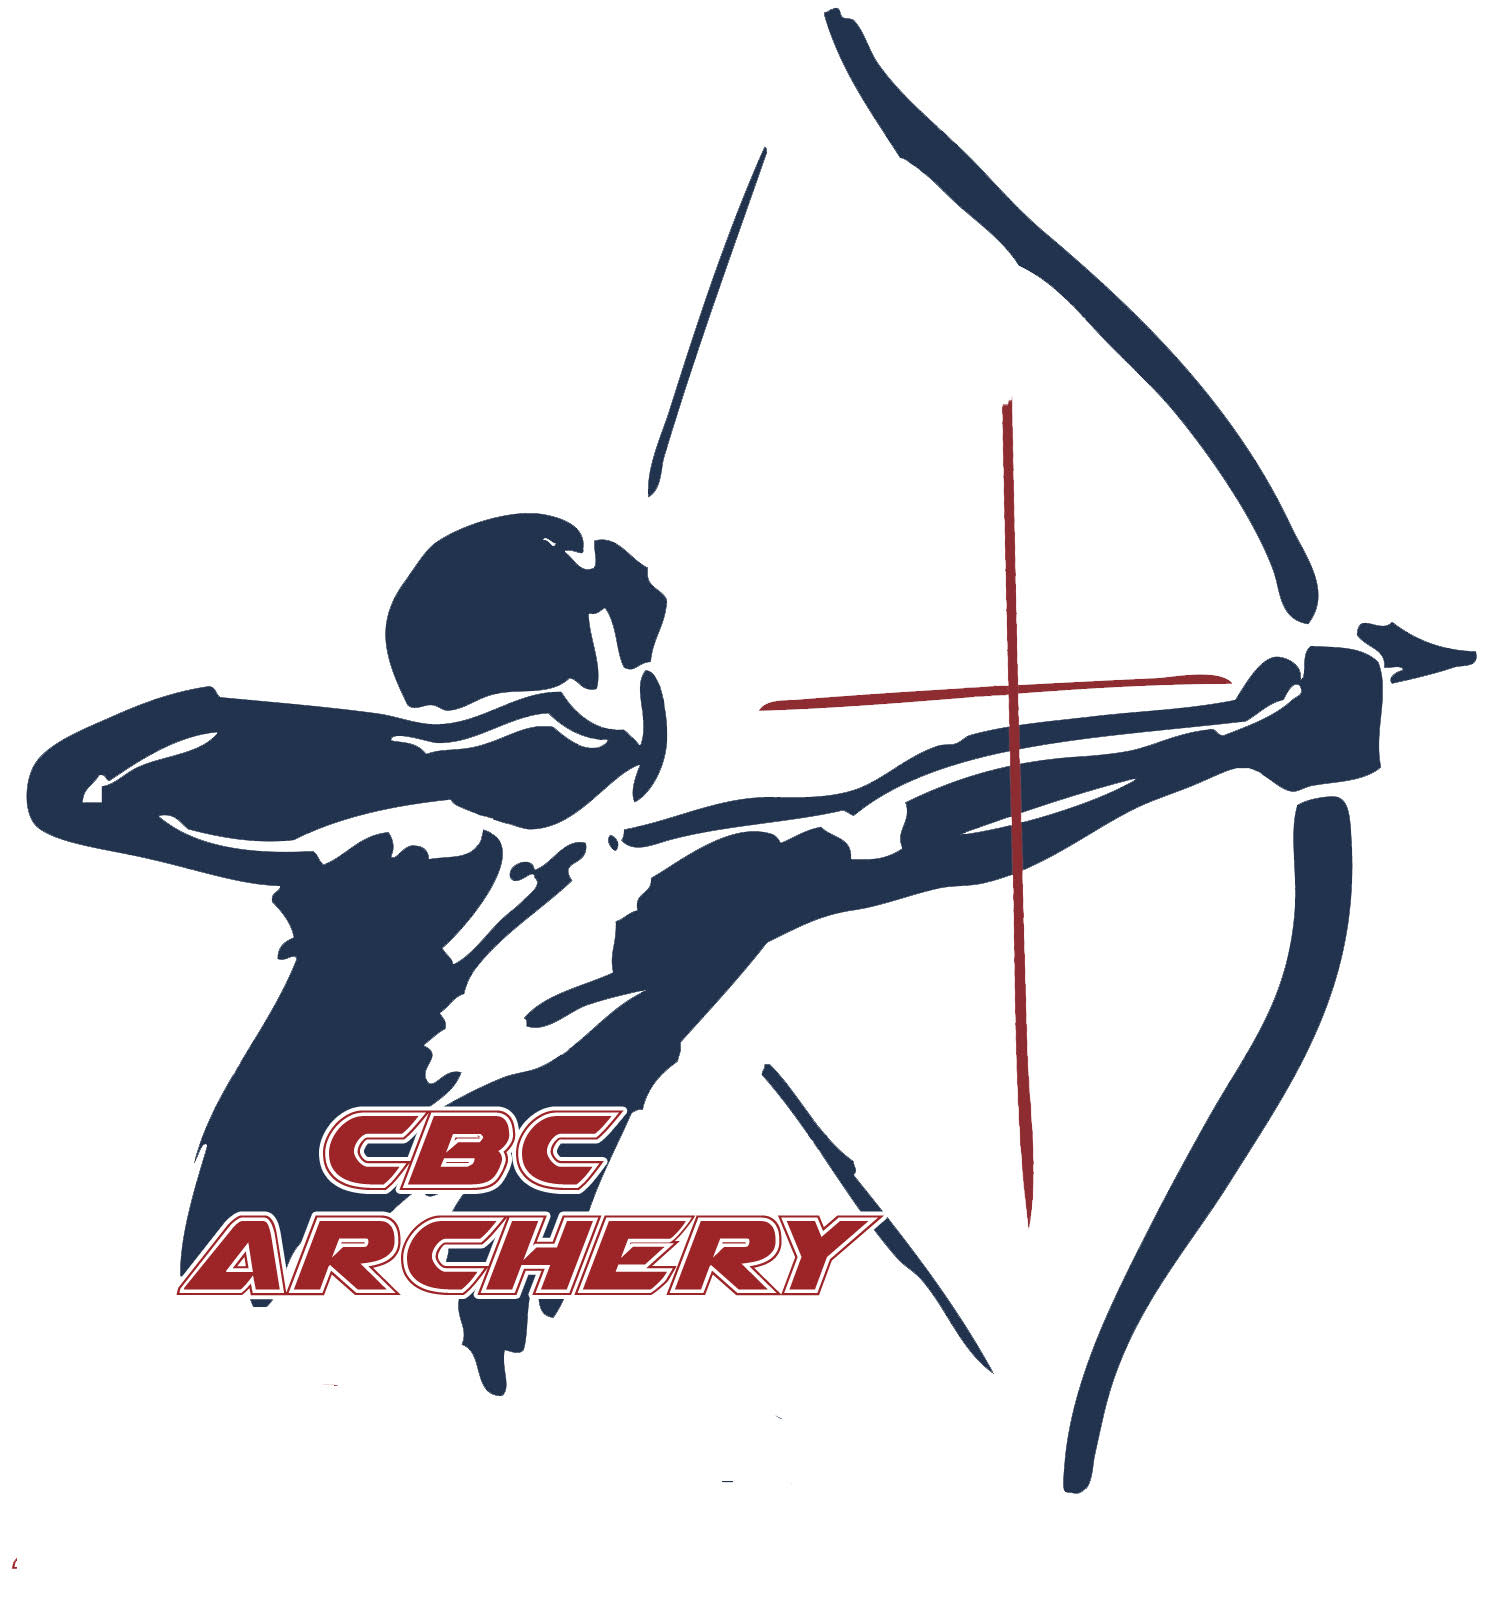 CBC Archery Logo 2016